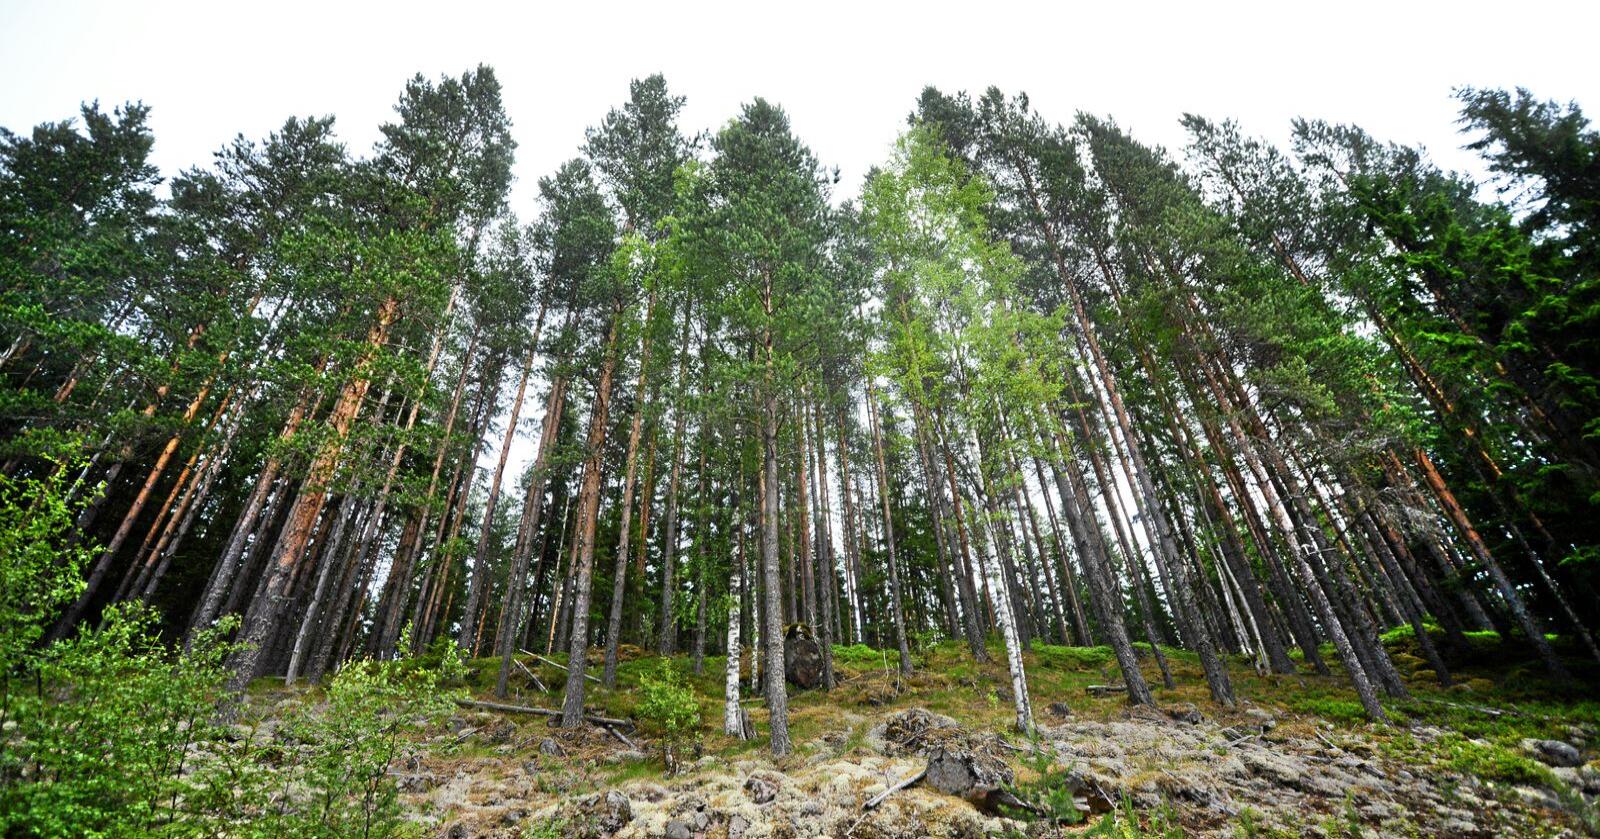 Delte meninger om skogsatsingen i årets statsbudsjett-forslag fra regjeringen. Foto: Siri Juell Rasmussen